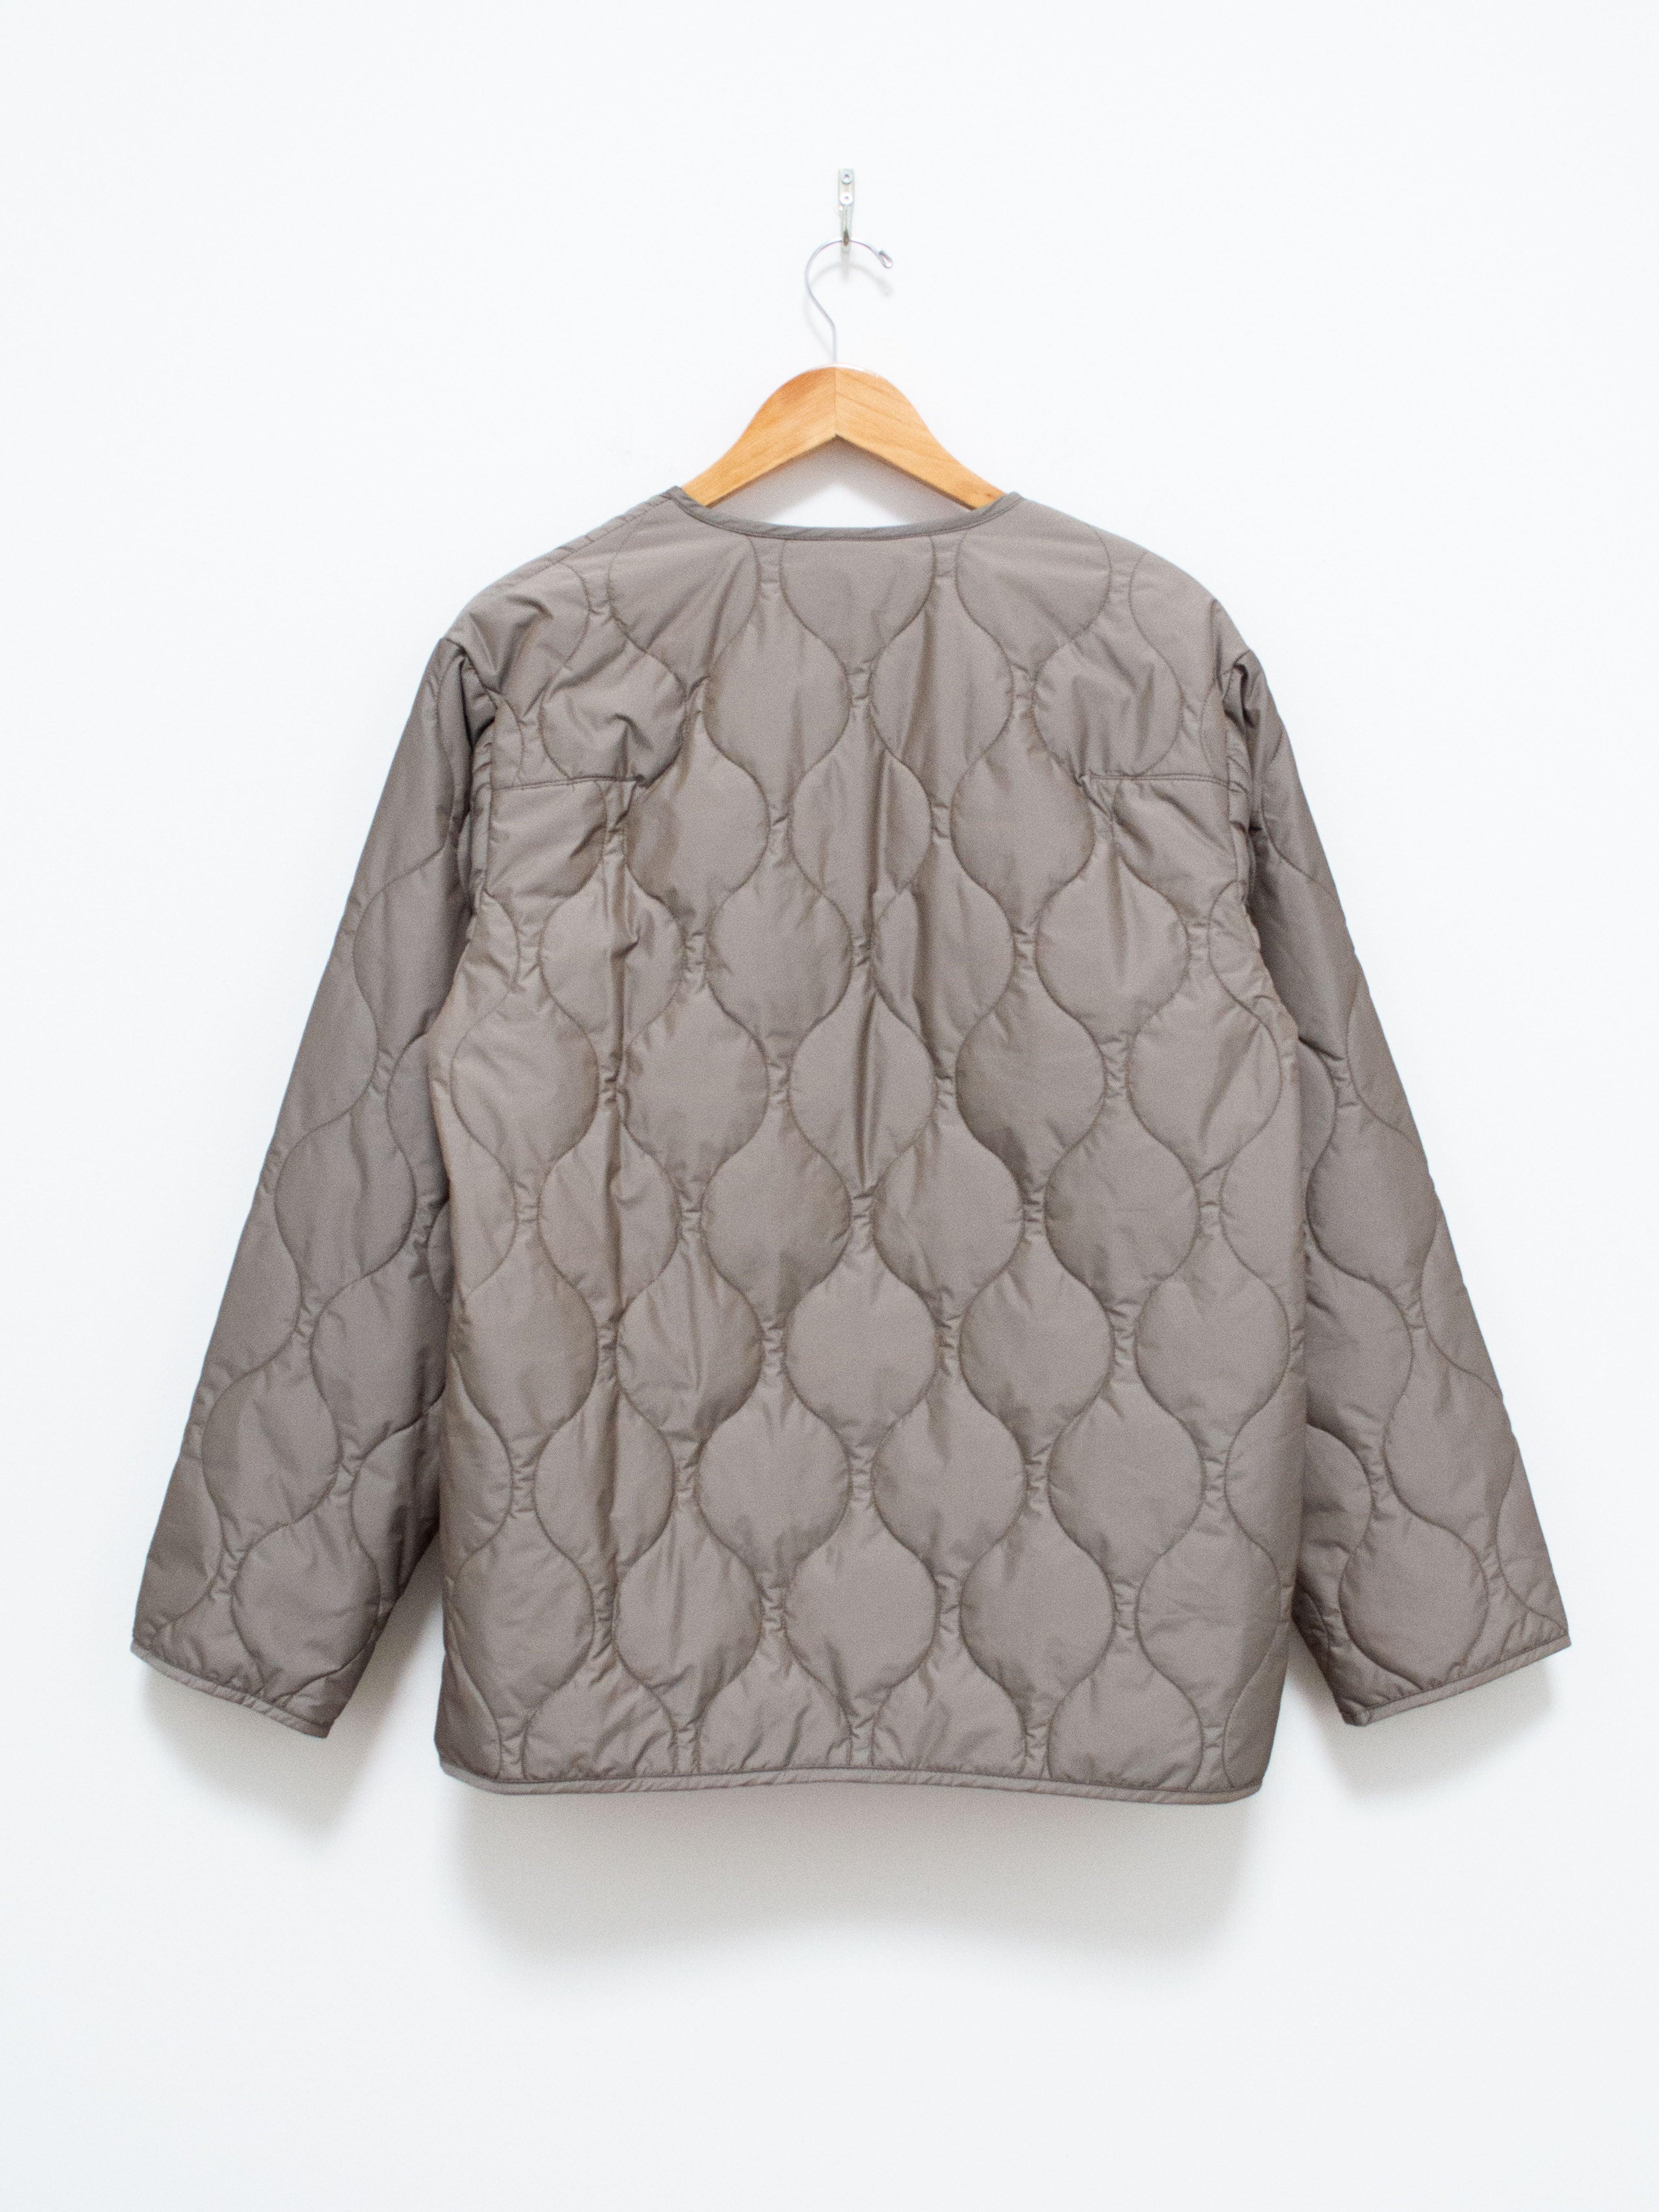 Namu Shop - ts(s) Lightweight Taffeta Quilted Liner Buckle Jacket - Greige